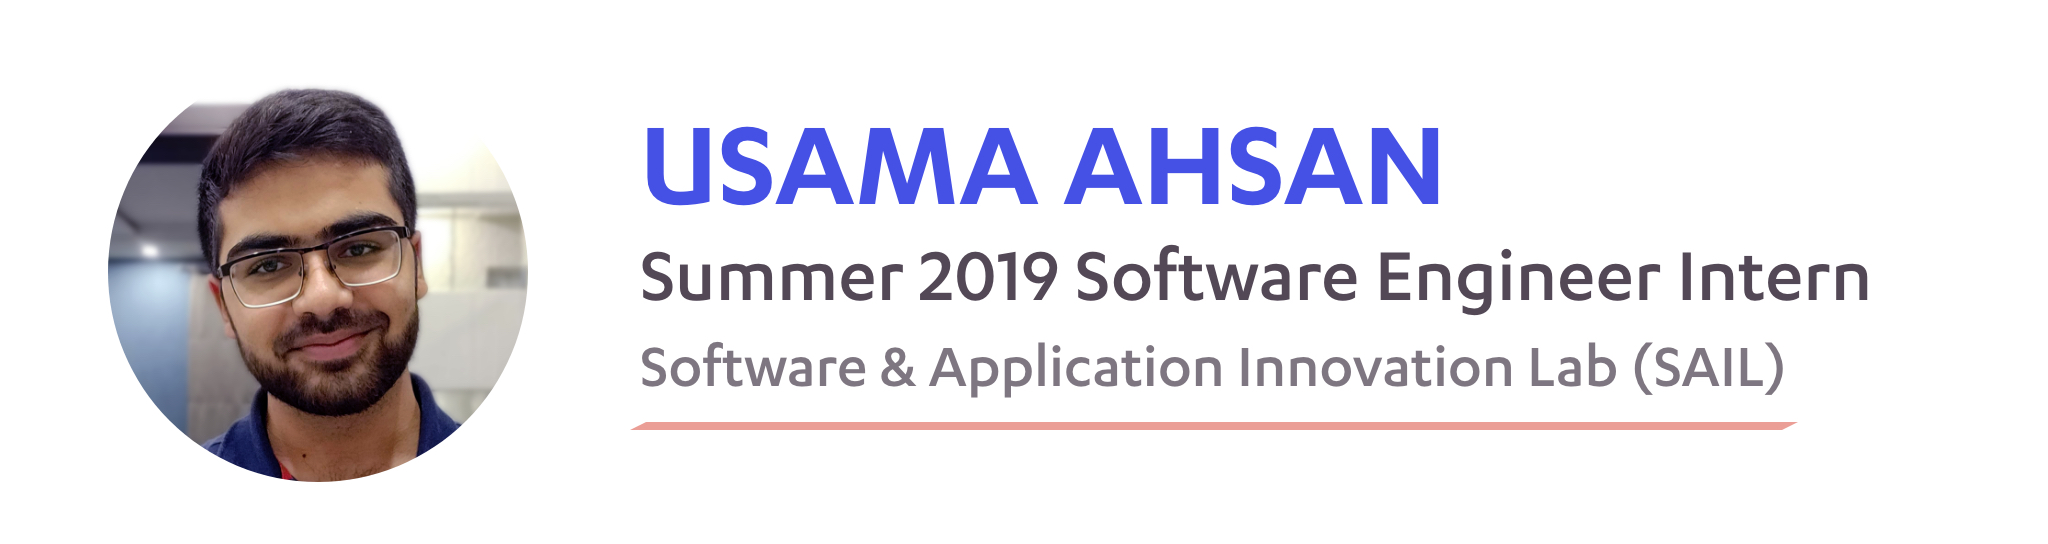 Usama Ahsan, SAIL Summer 2019 Software Engineer Intern